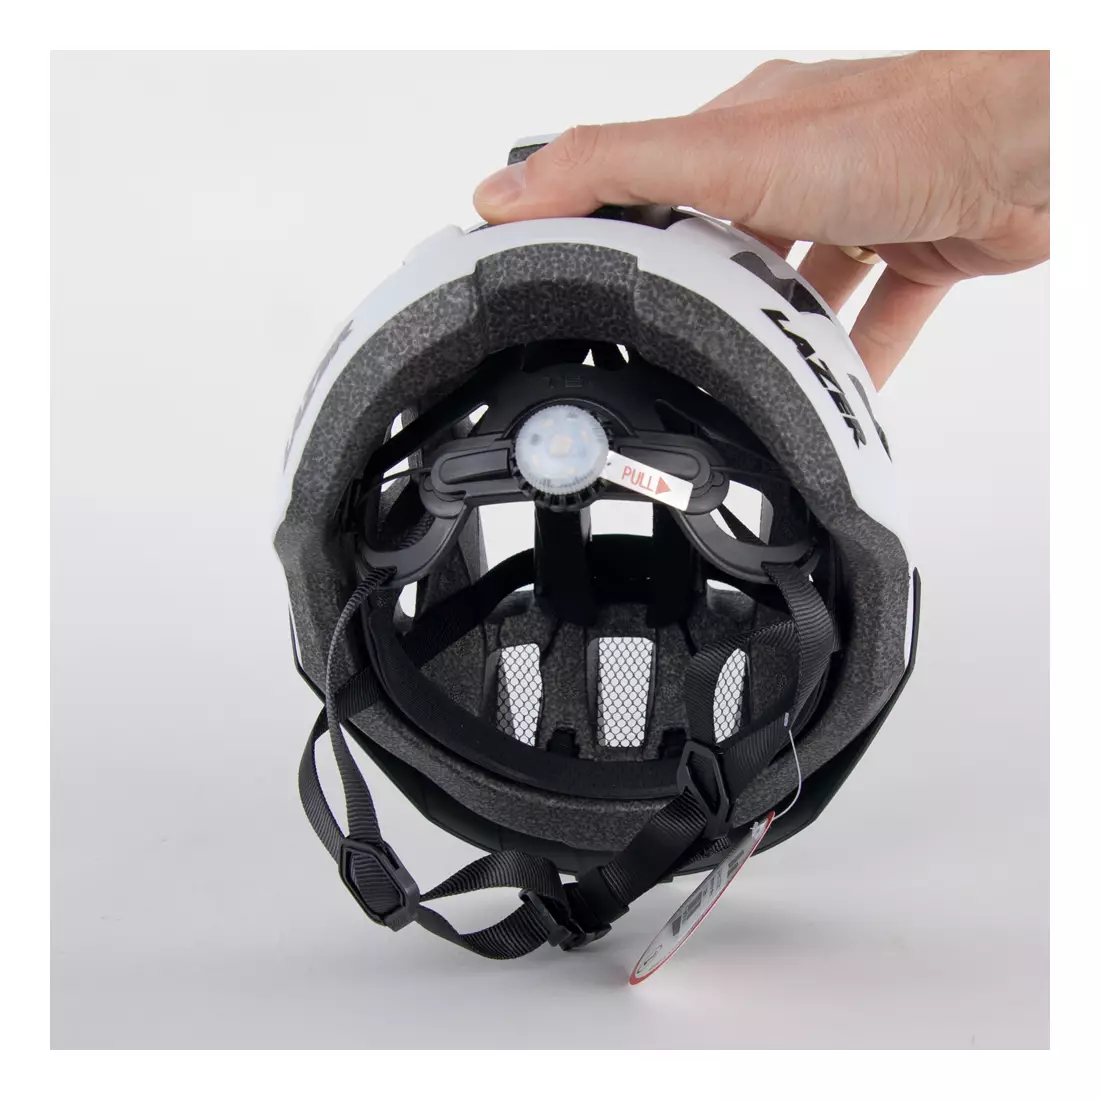 Lazer bicycle helmet Petit DLX Matte White Uni +Led